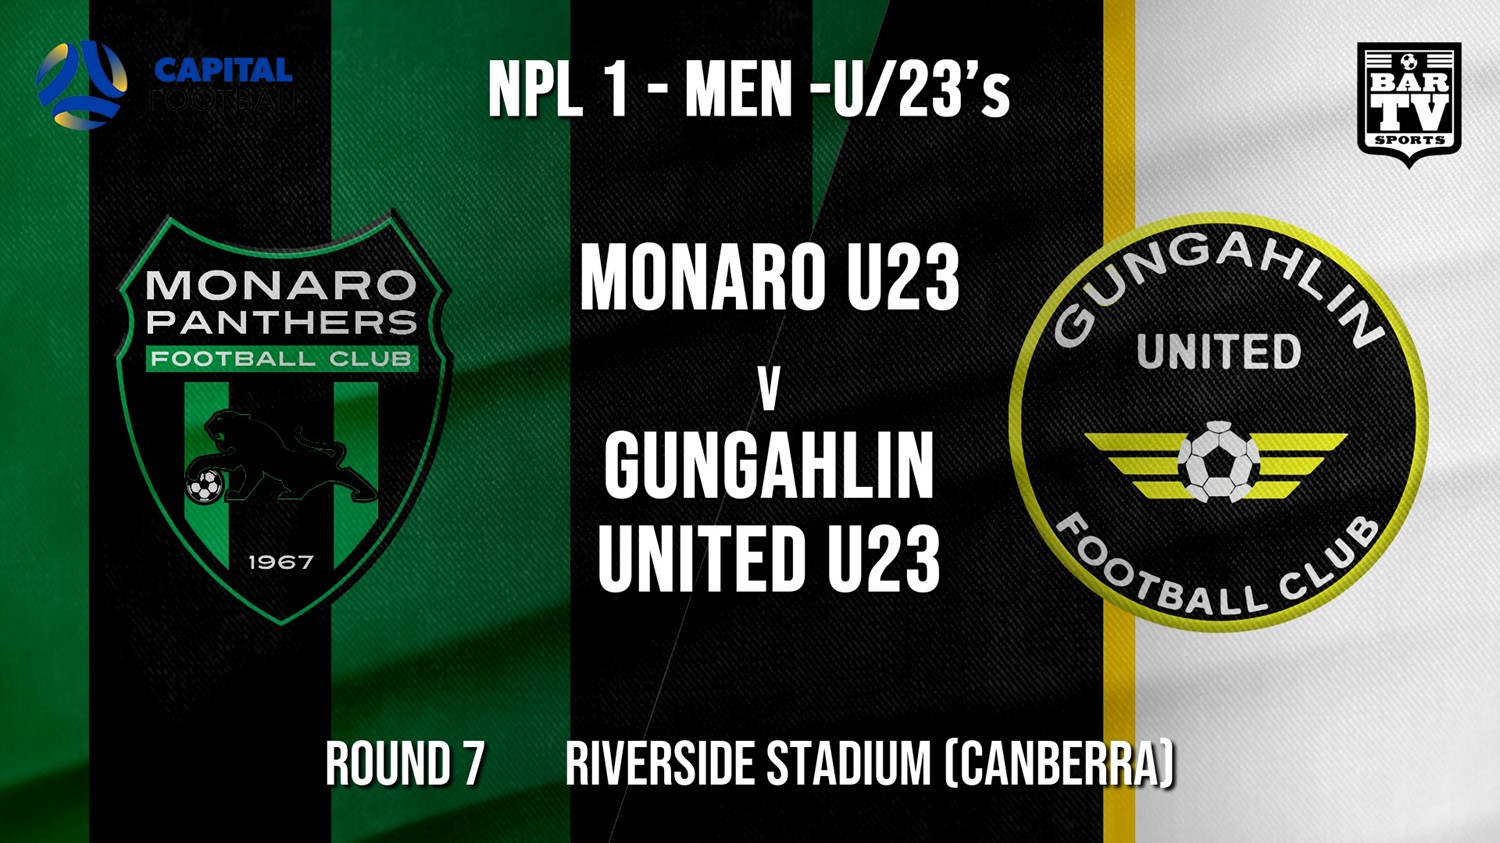 NPL1 Men - U23 - Capital Football  Round 7 - Monaro Panthers U23 v Gungahlin United U23 Minigame Slate Image